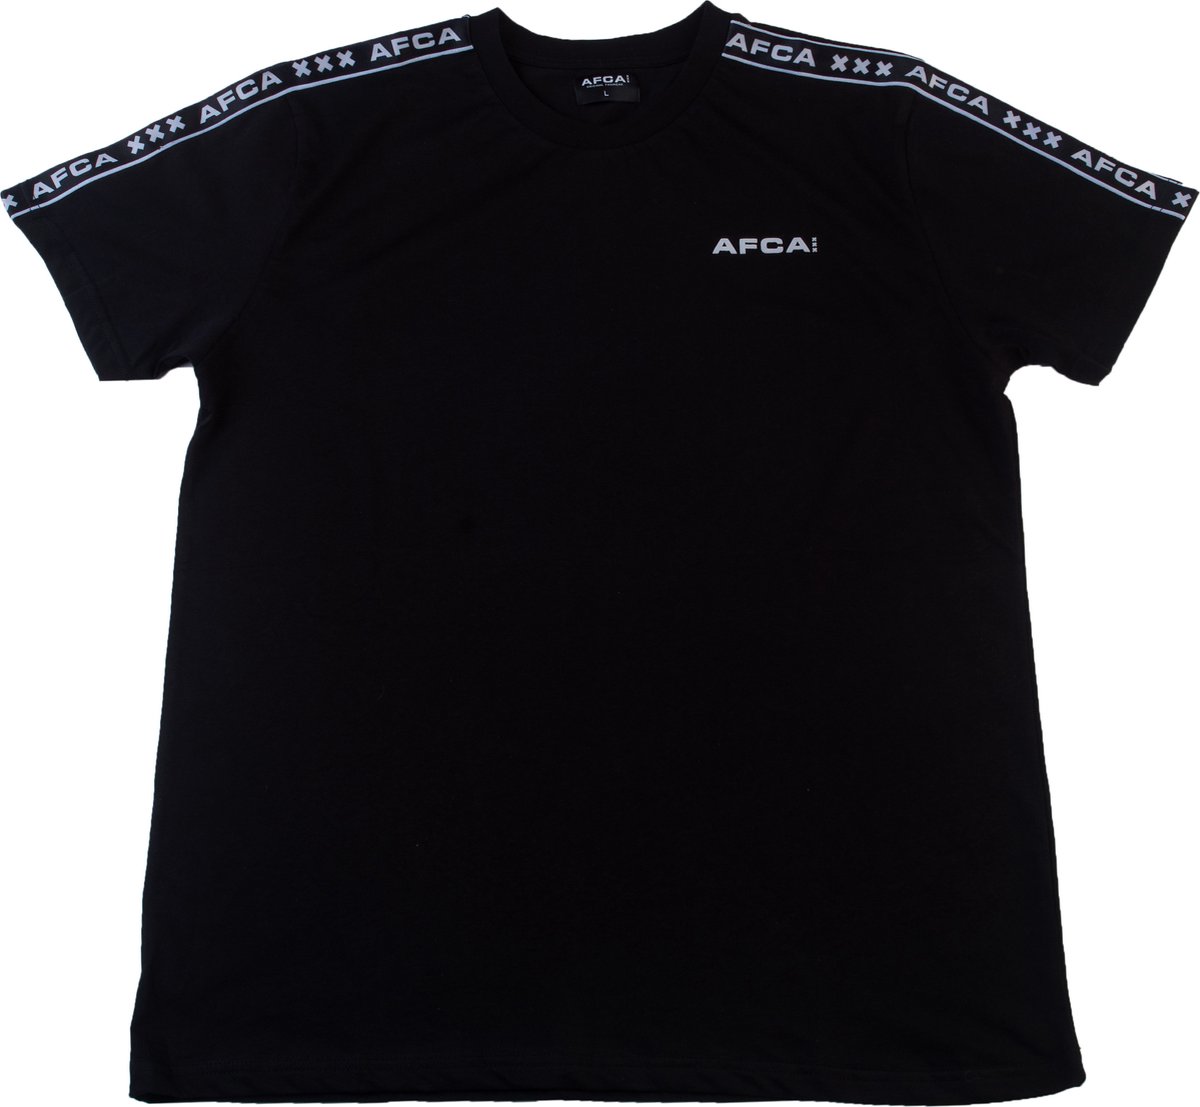 T-Shirt AFCA XXX black - AFCA - Ajax - Amsterdam - Fanwear - Zomercollectie